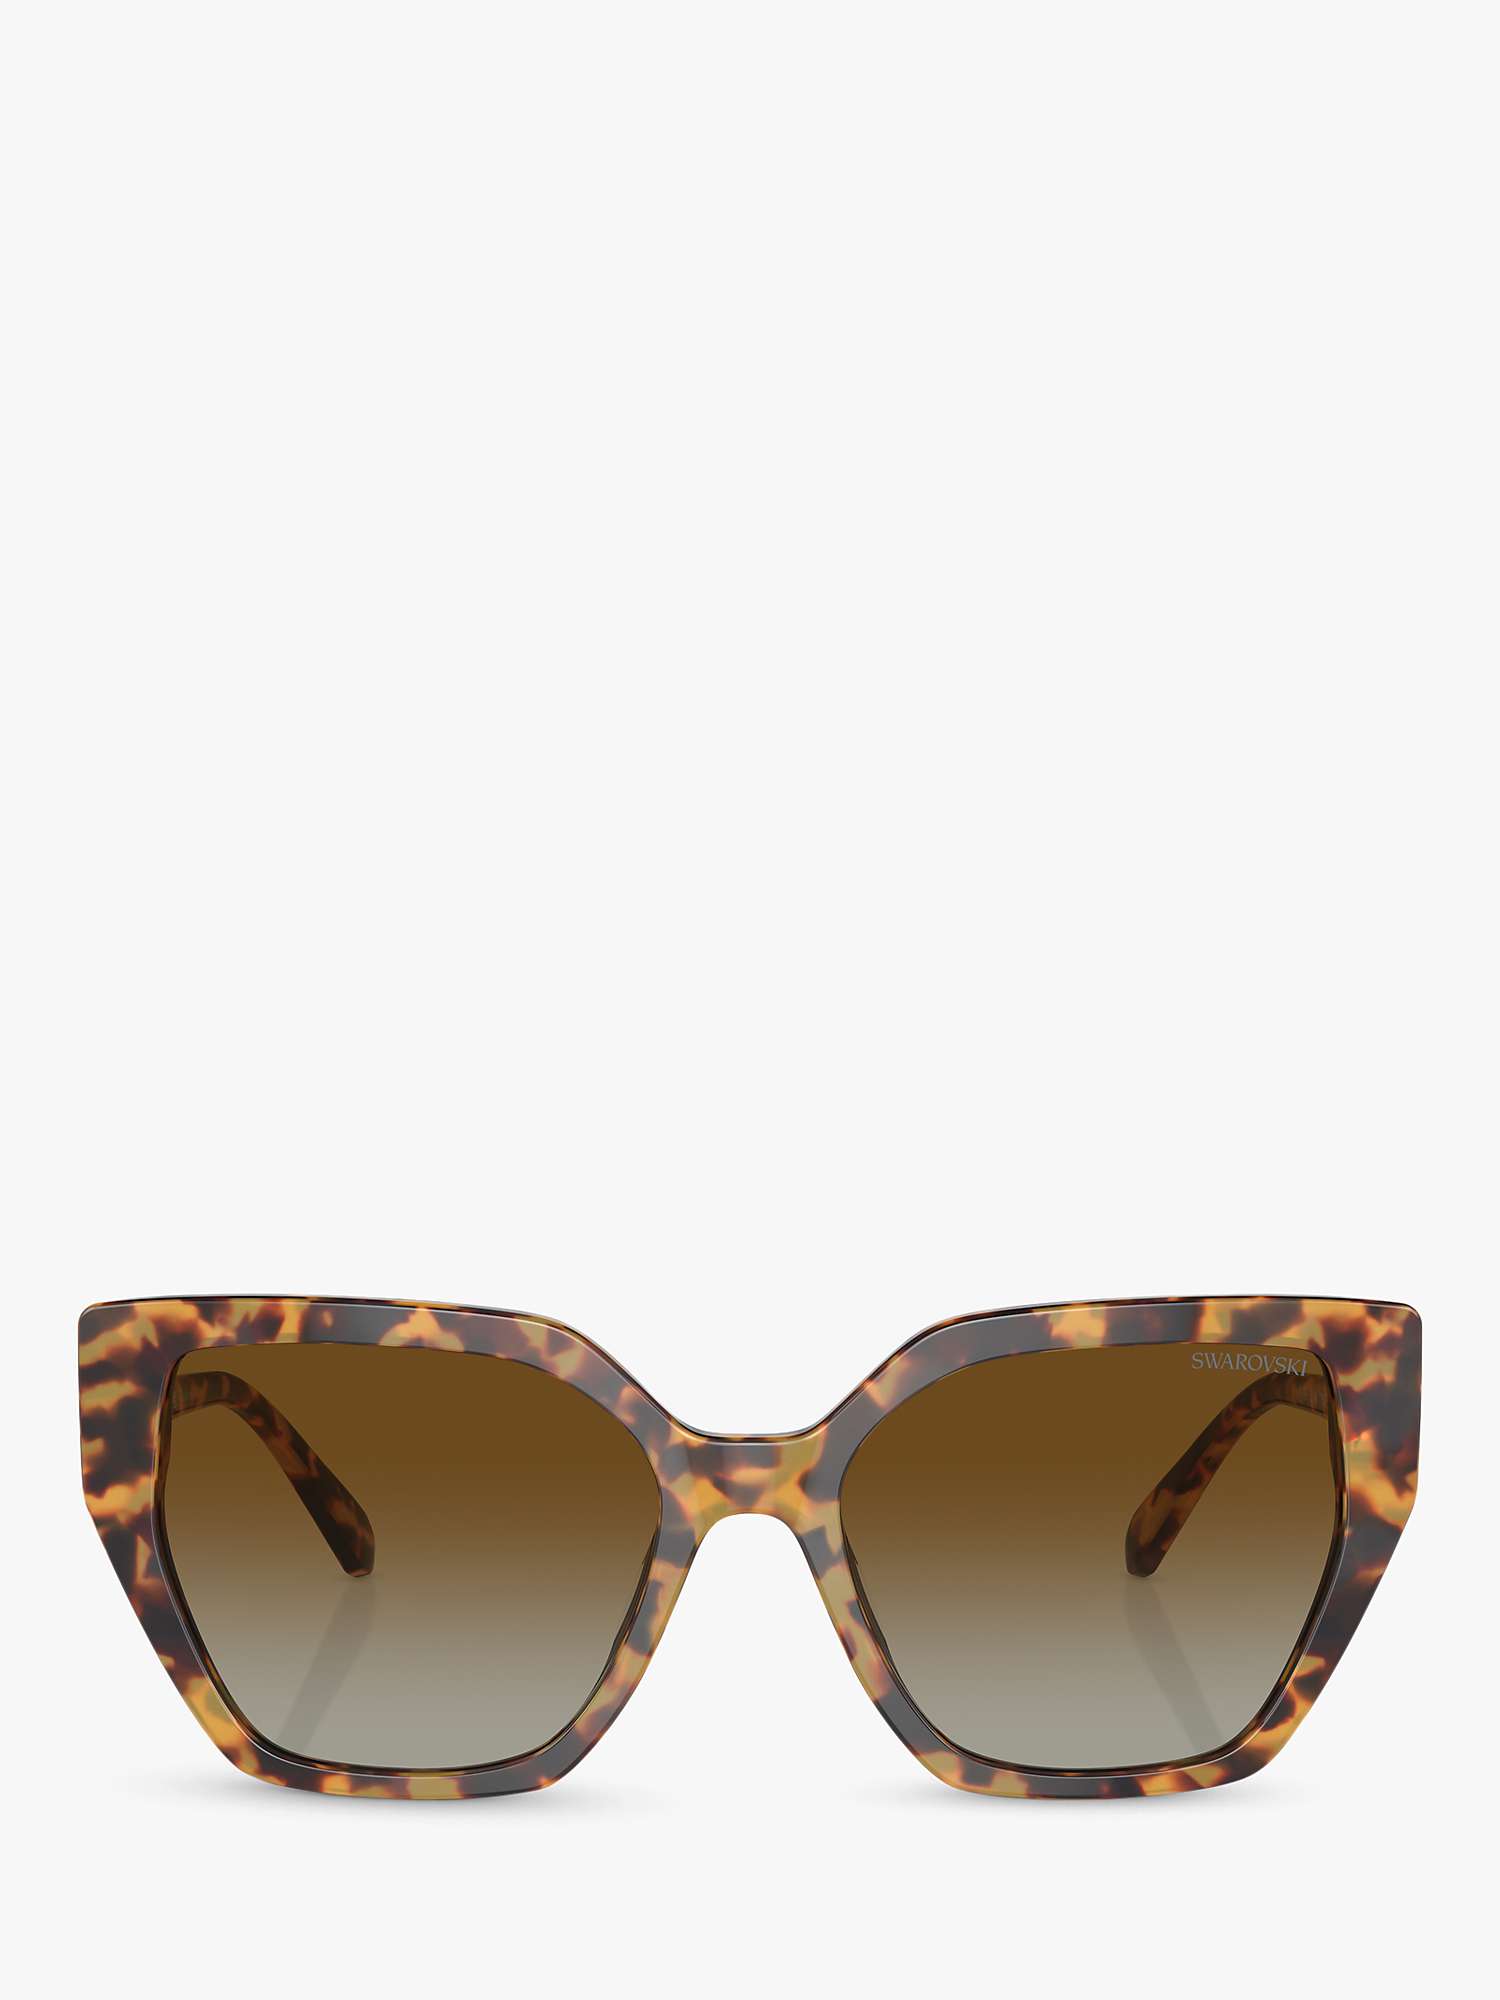 Buy Swarovski SK6016 Women's Polarised Cat's Eye Sunglasses, Medium Havana/Brown Gradient Online at johnlewis.com